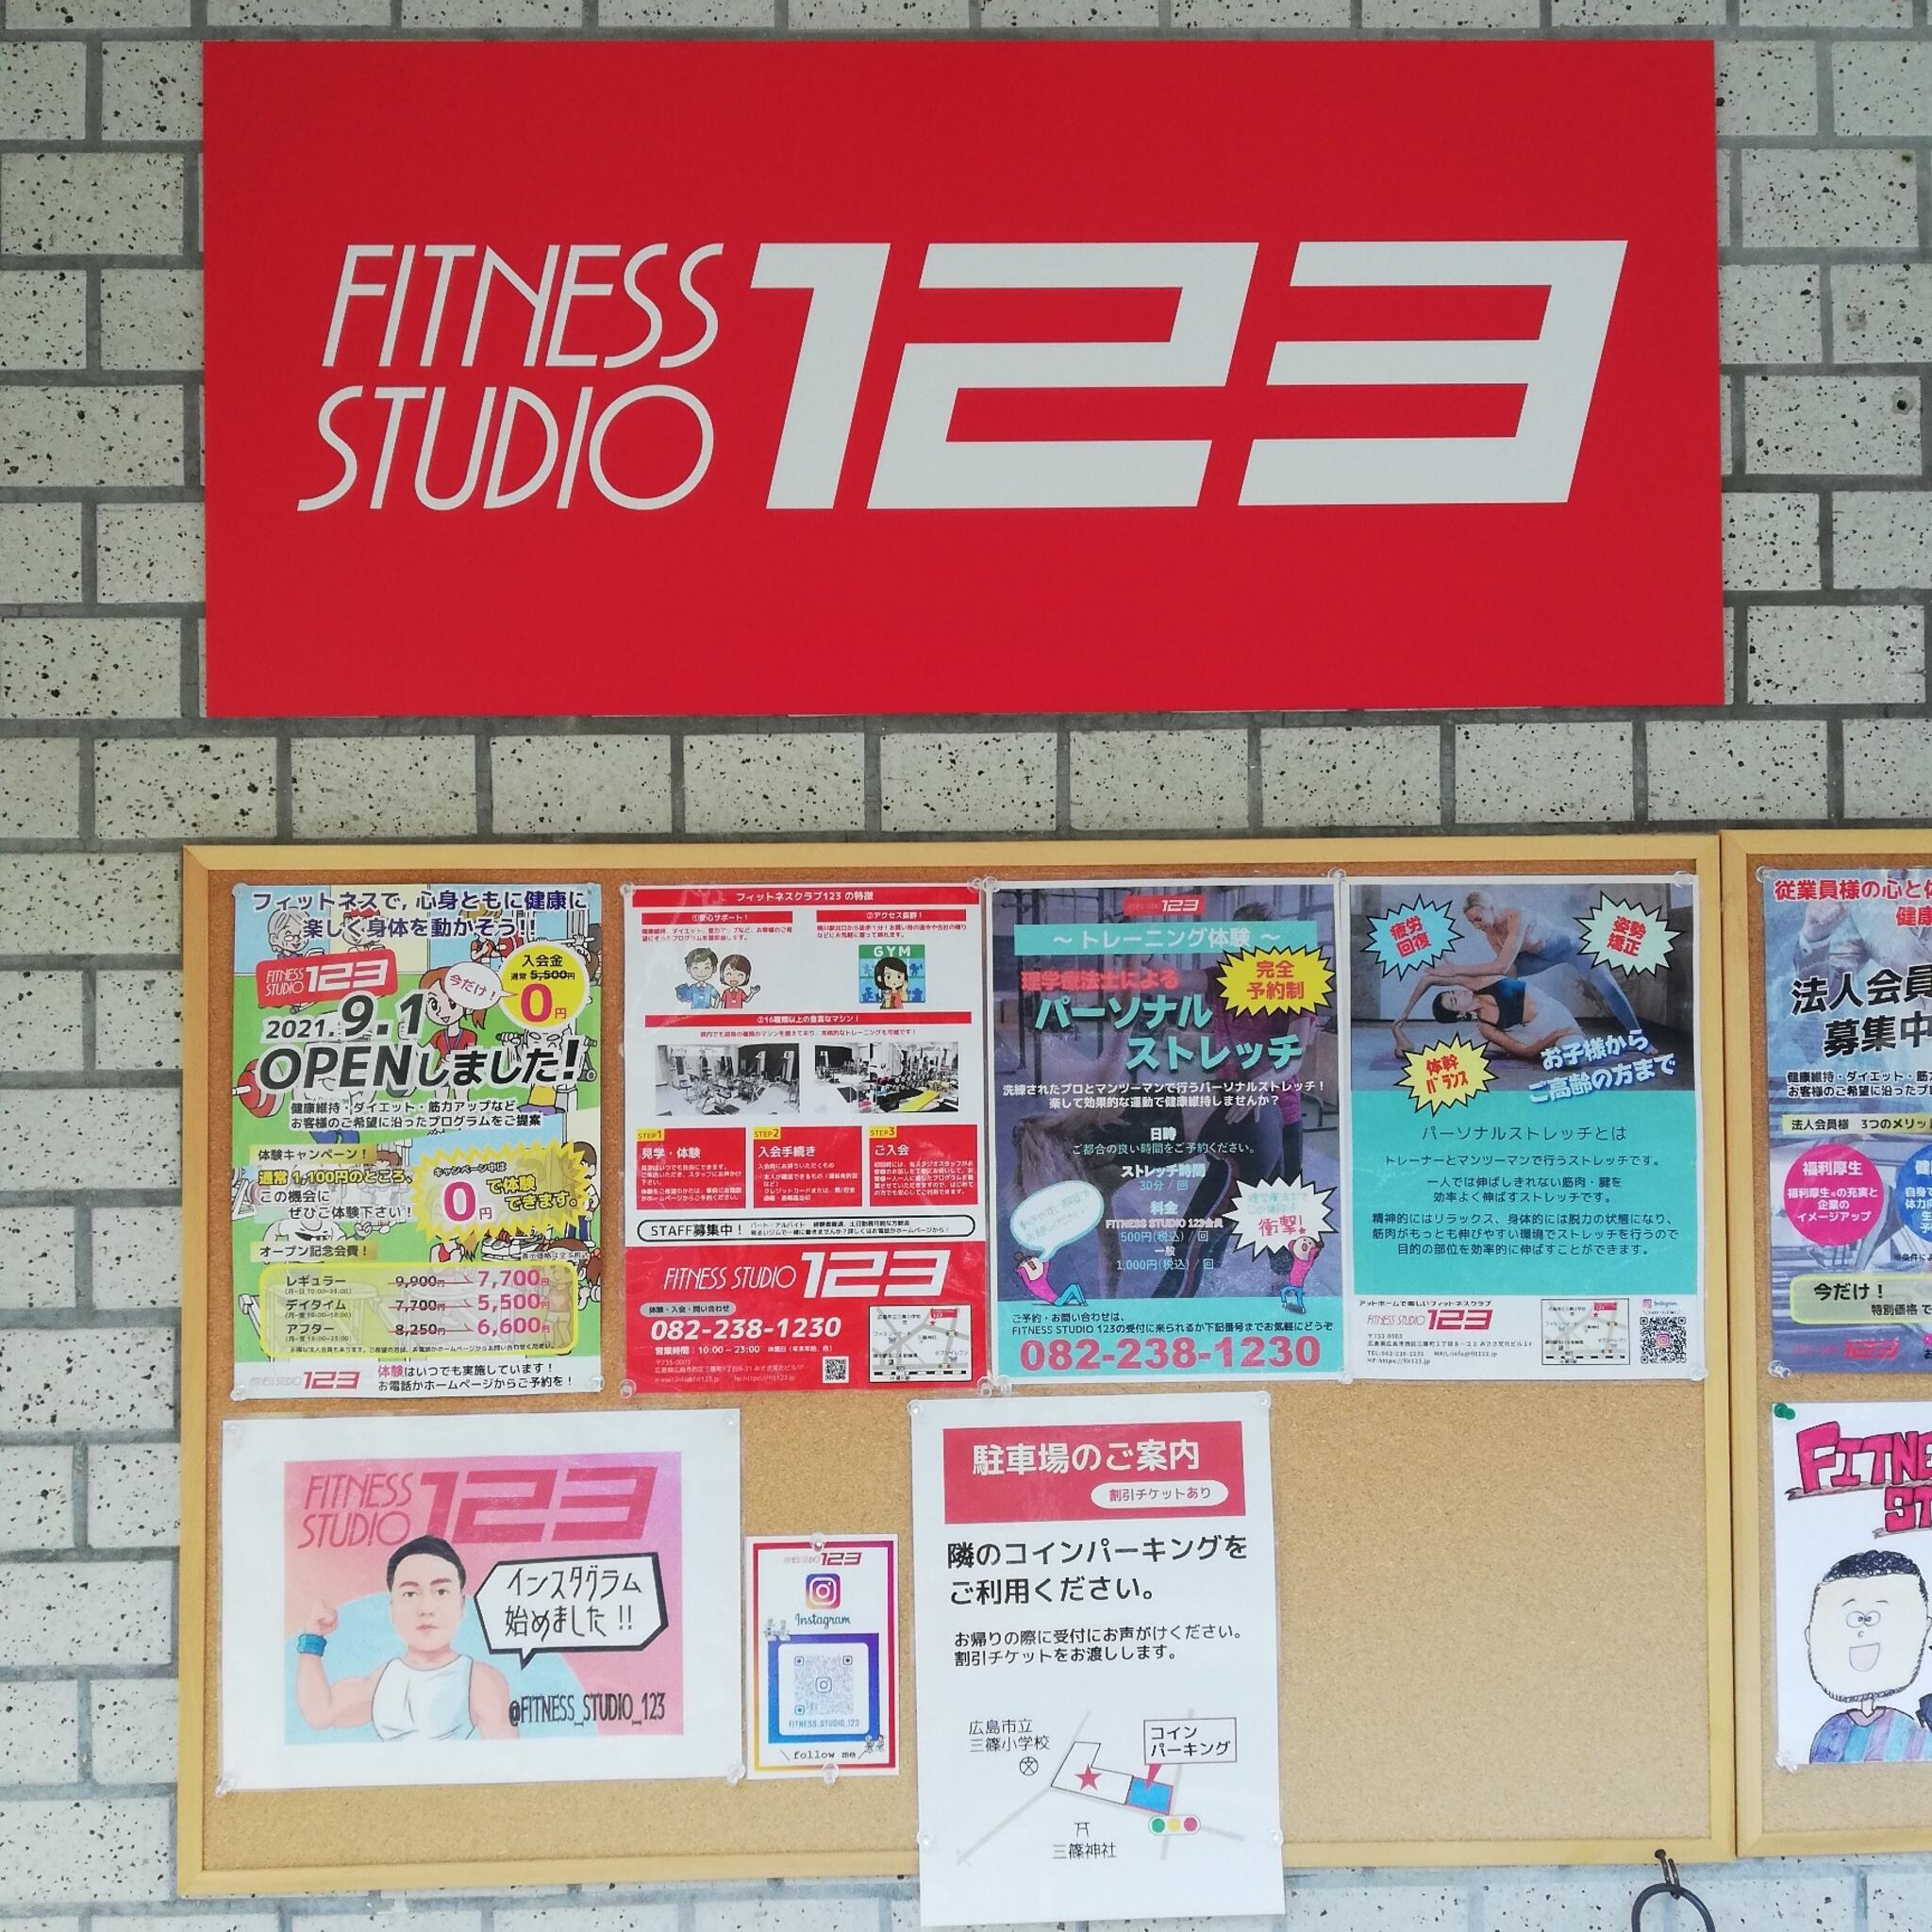 FITNESS STUDIO 123 広島横川店の代表写真10